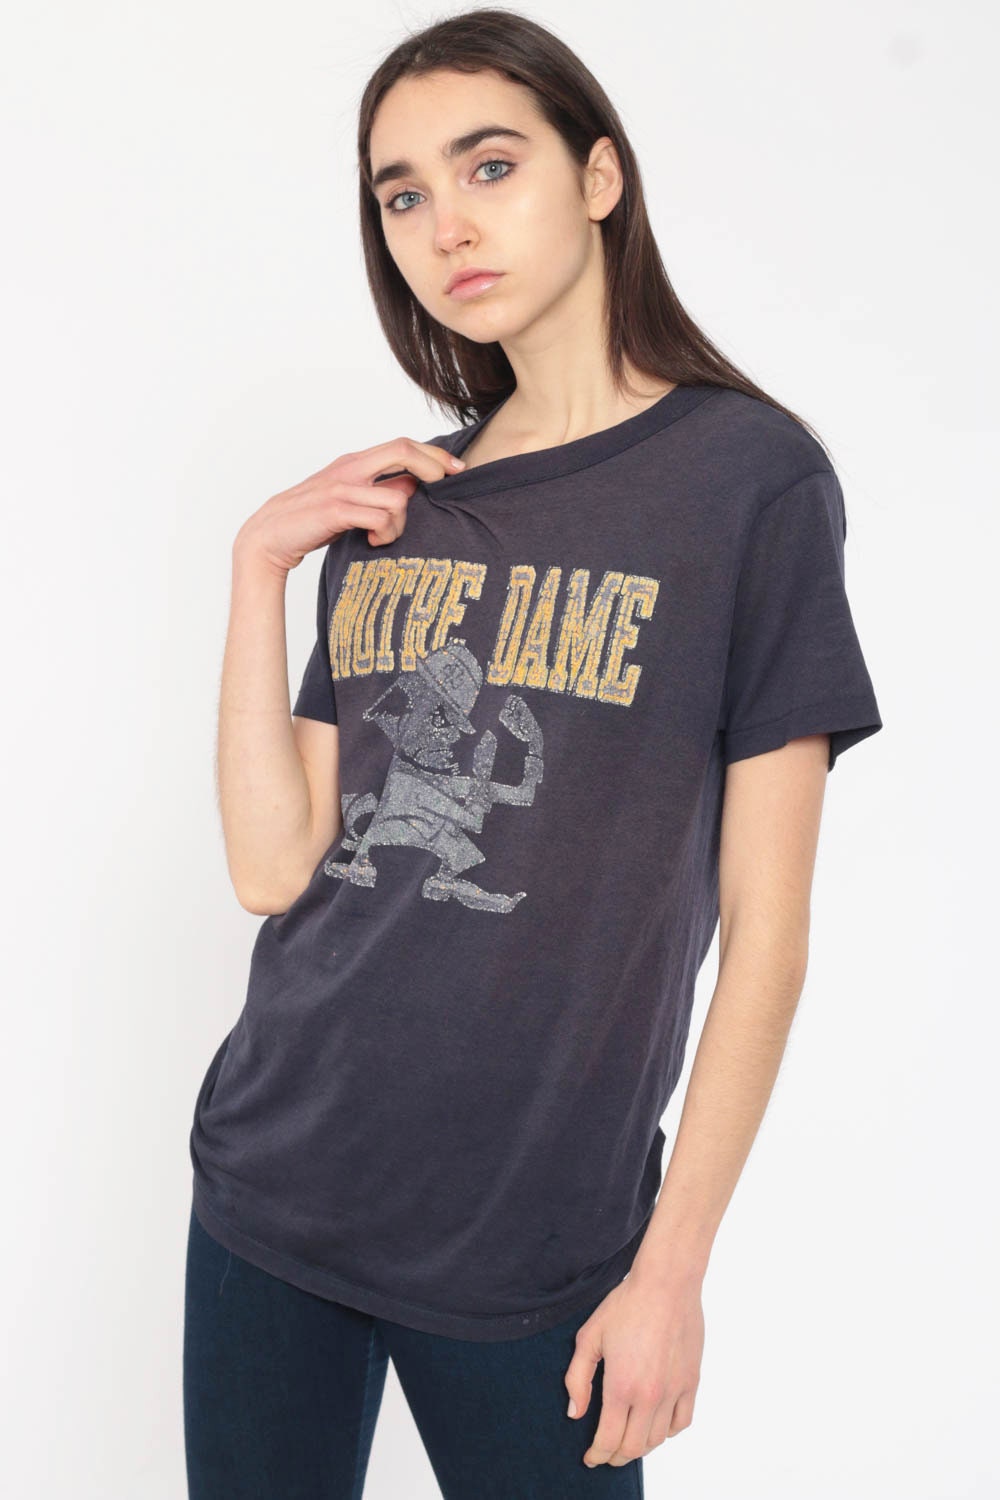 Vintage Notre Dame Shirt Distressed Champion College Football Tshirt